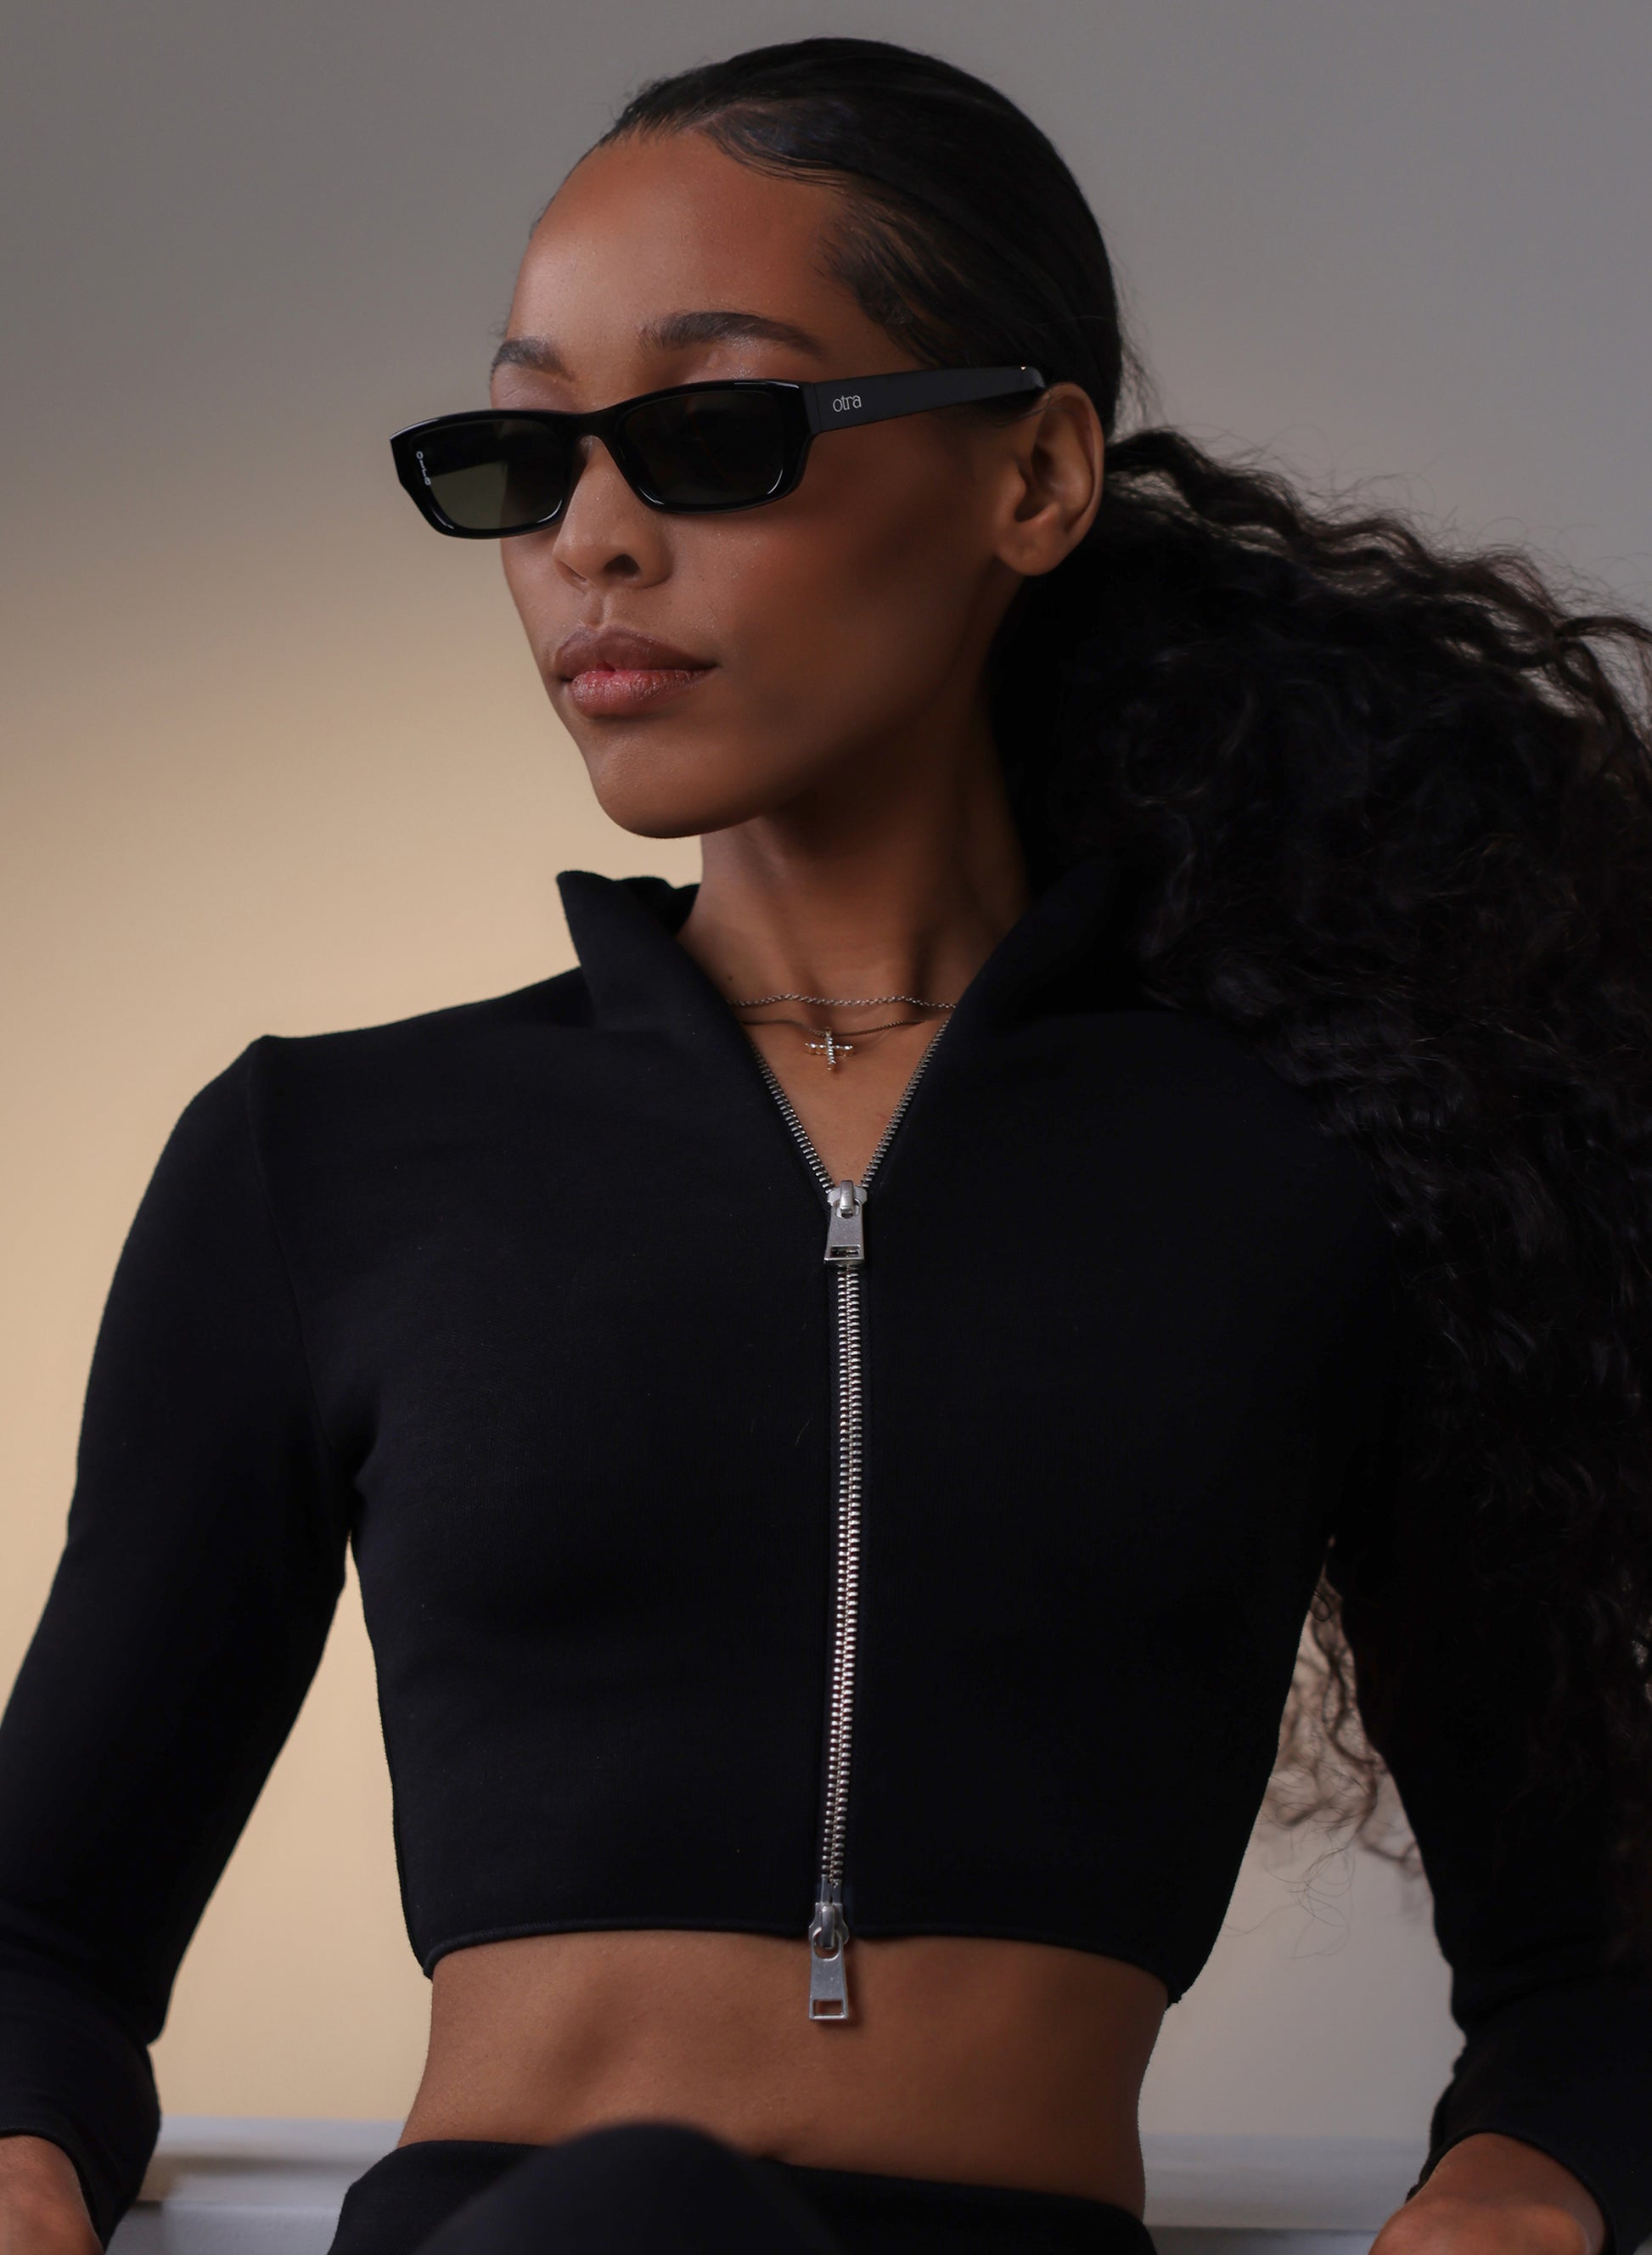 Mabel black sunglasses on-model